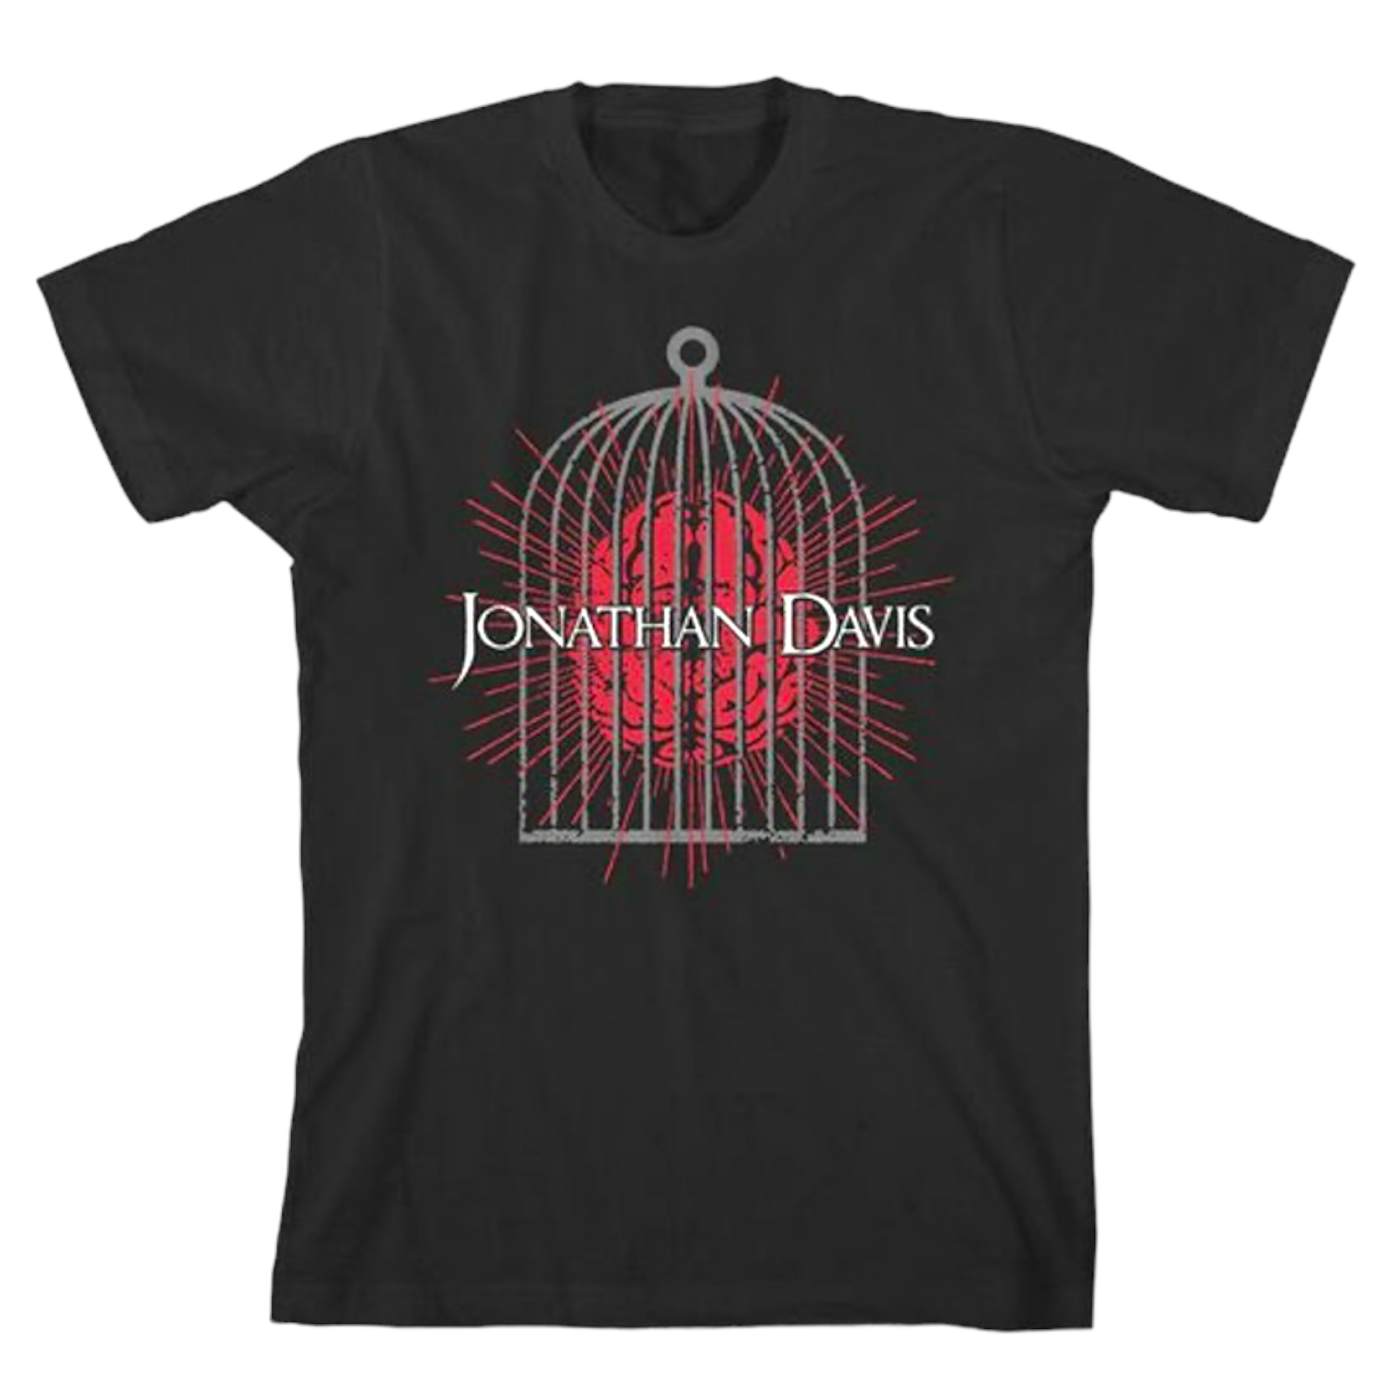 Jonathan Davis Caged Thoughts T-Shirt